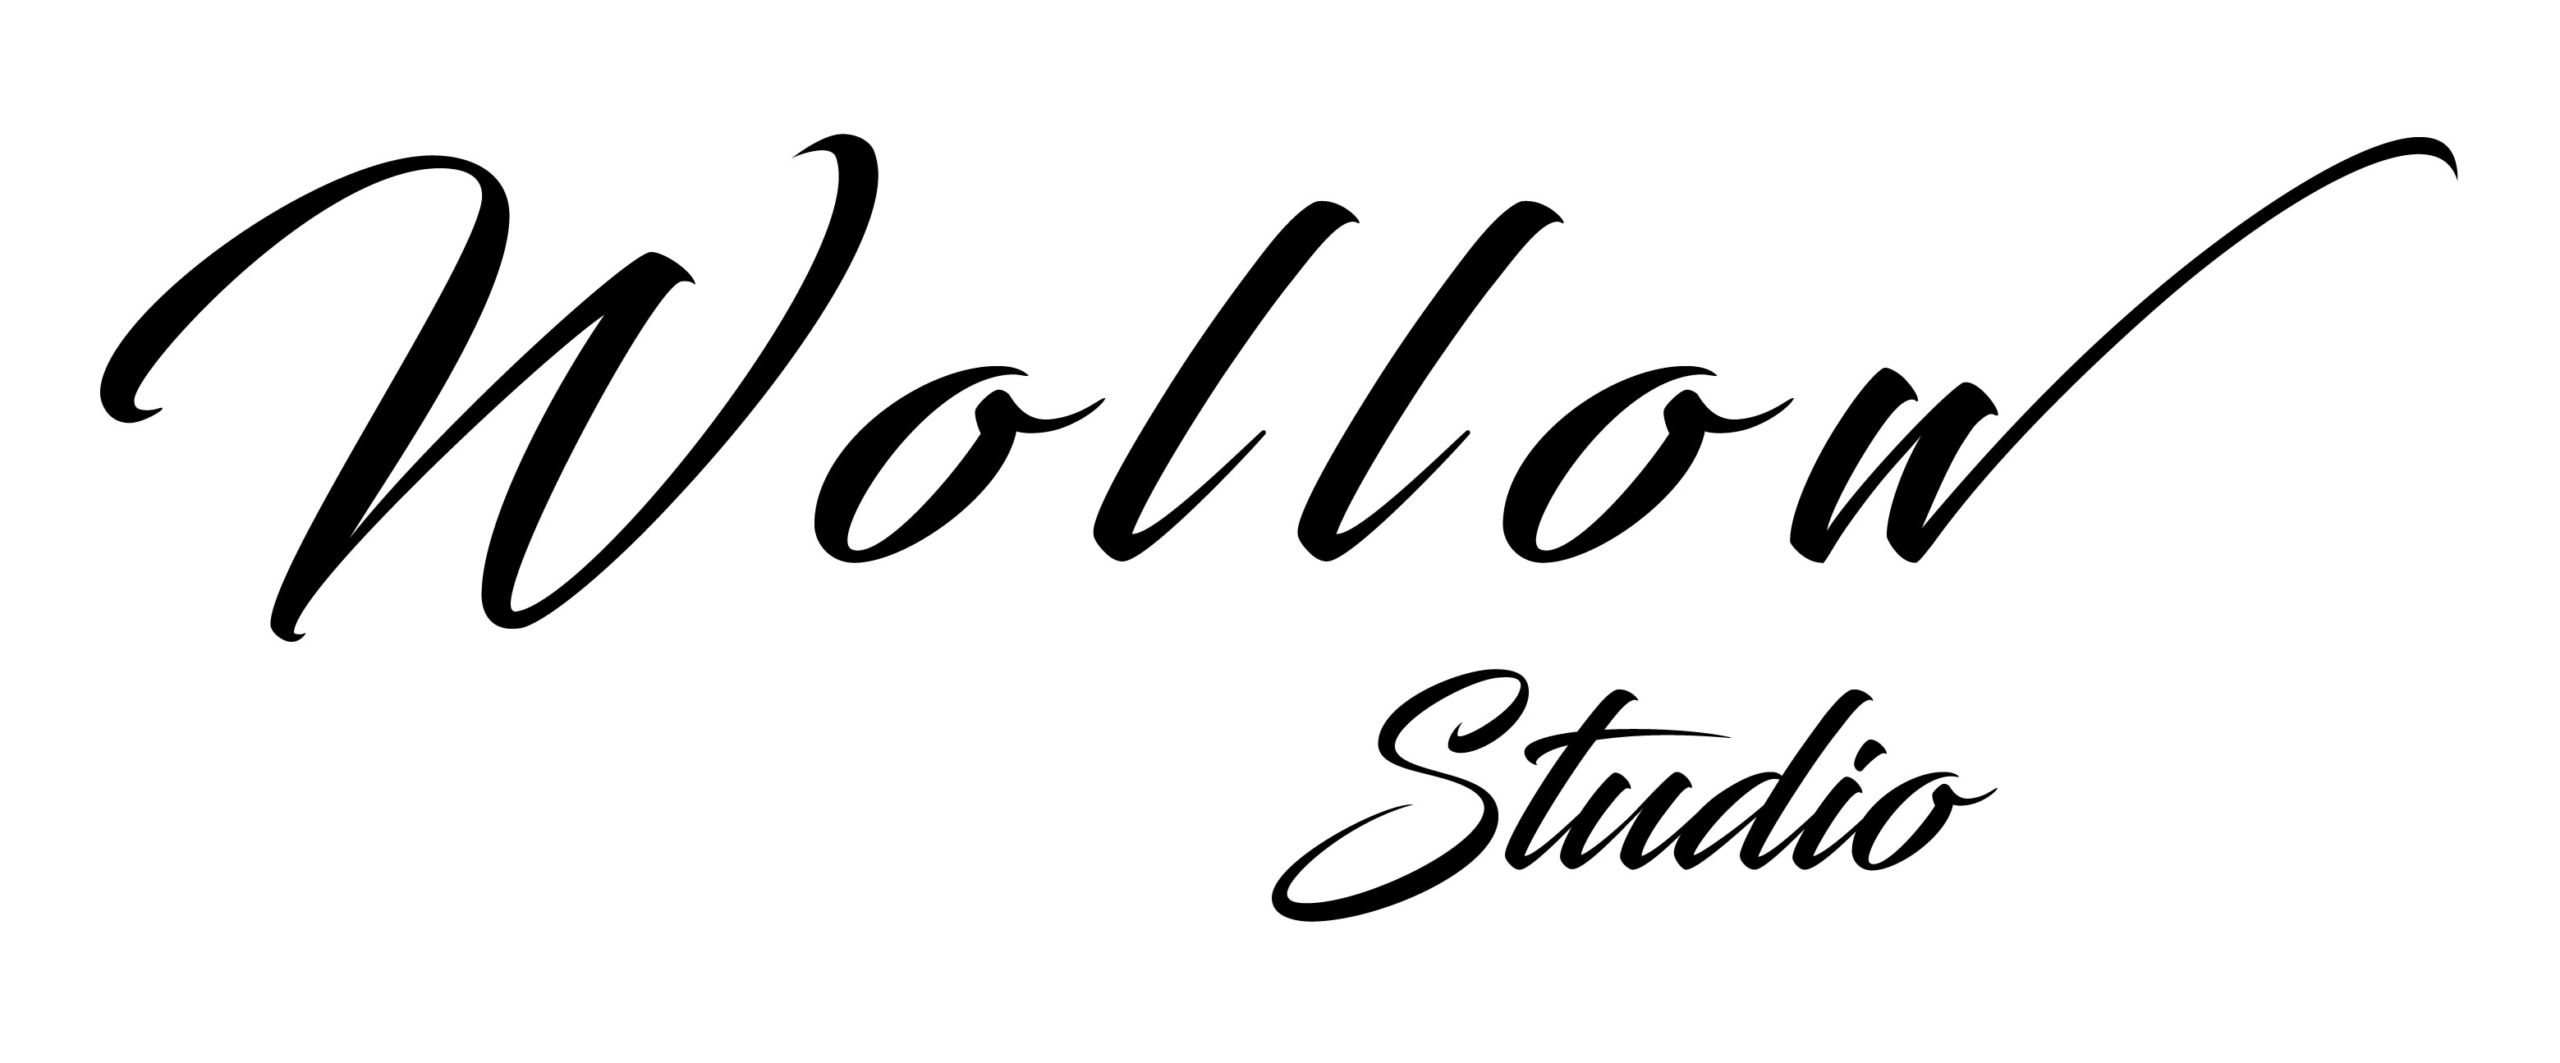 wollow-studio